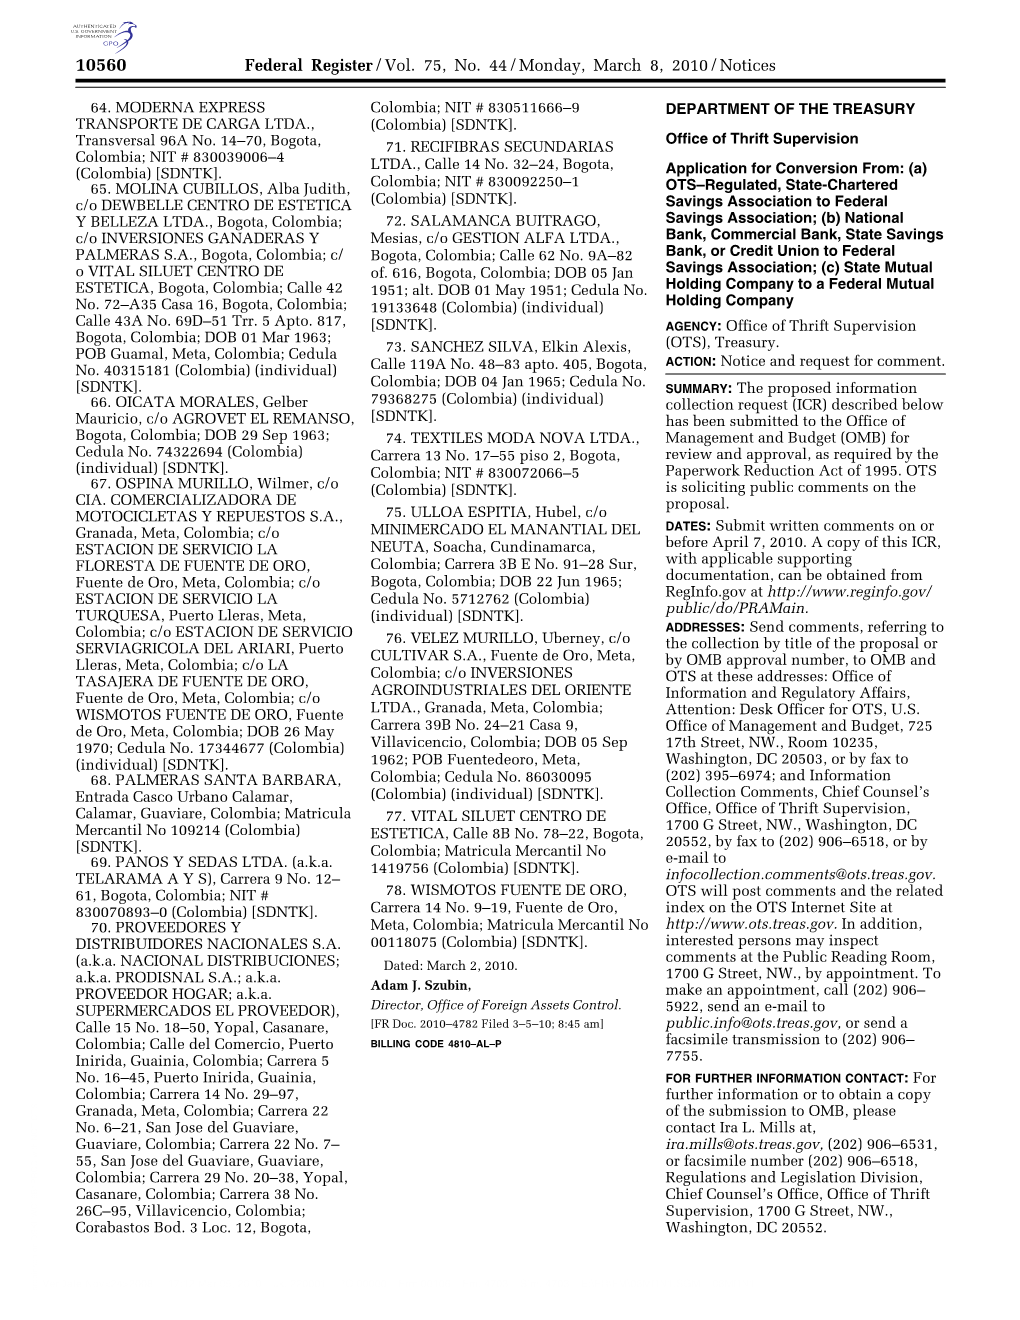 Federal Register/Vol. 75, No. 44/Monday, March 8, 2010/Notices